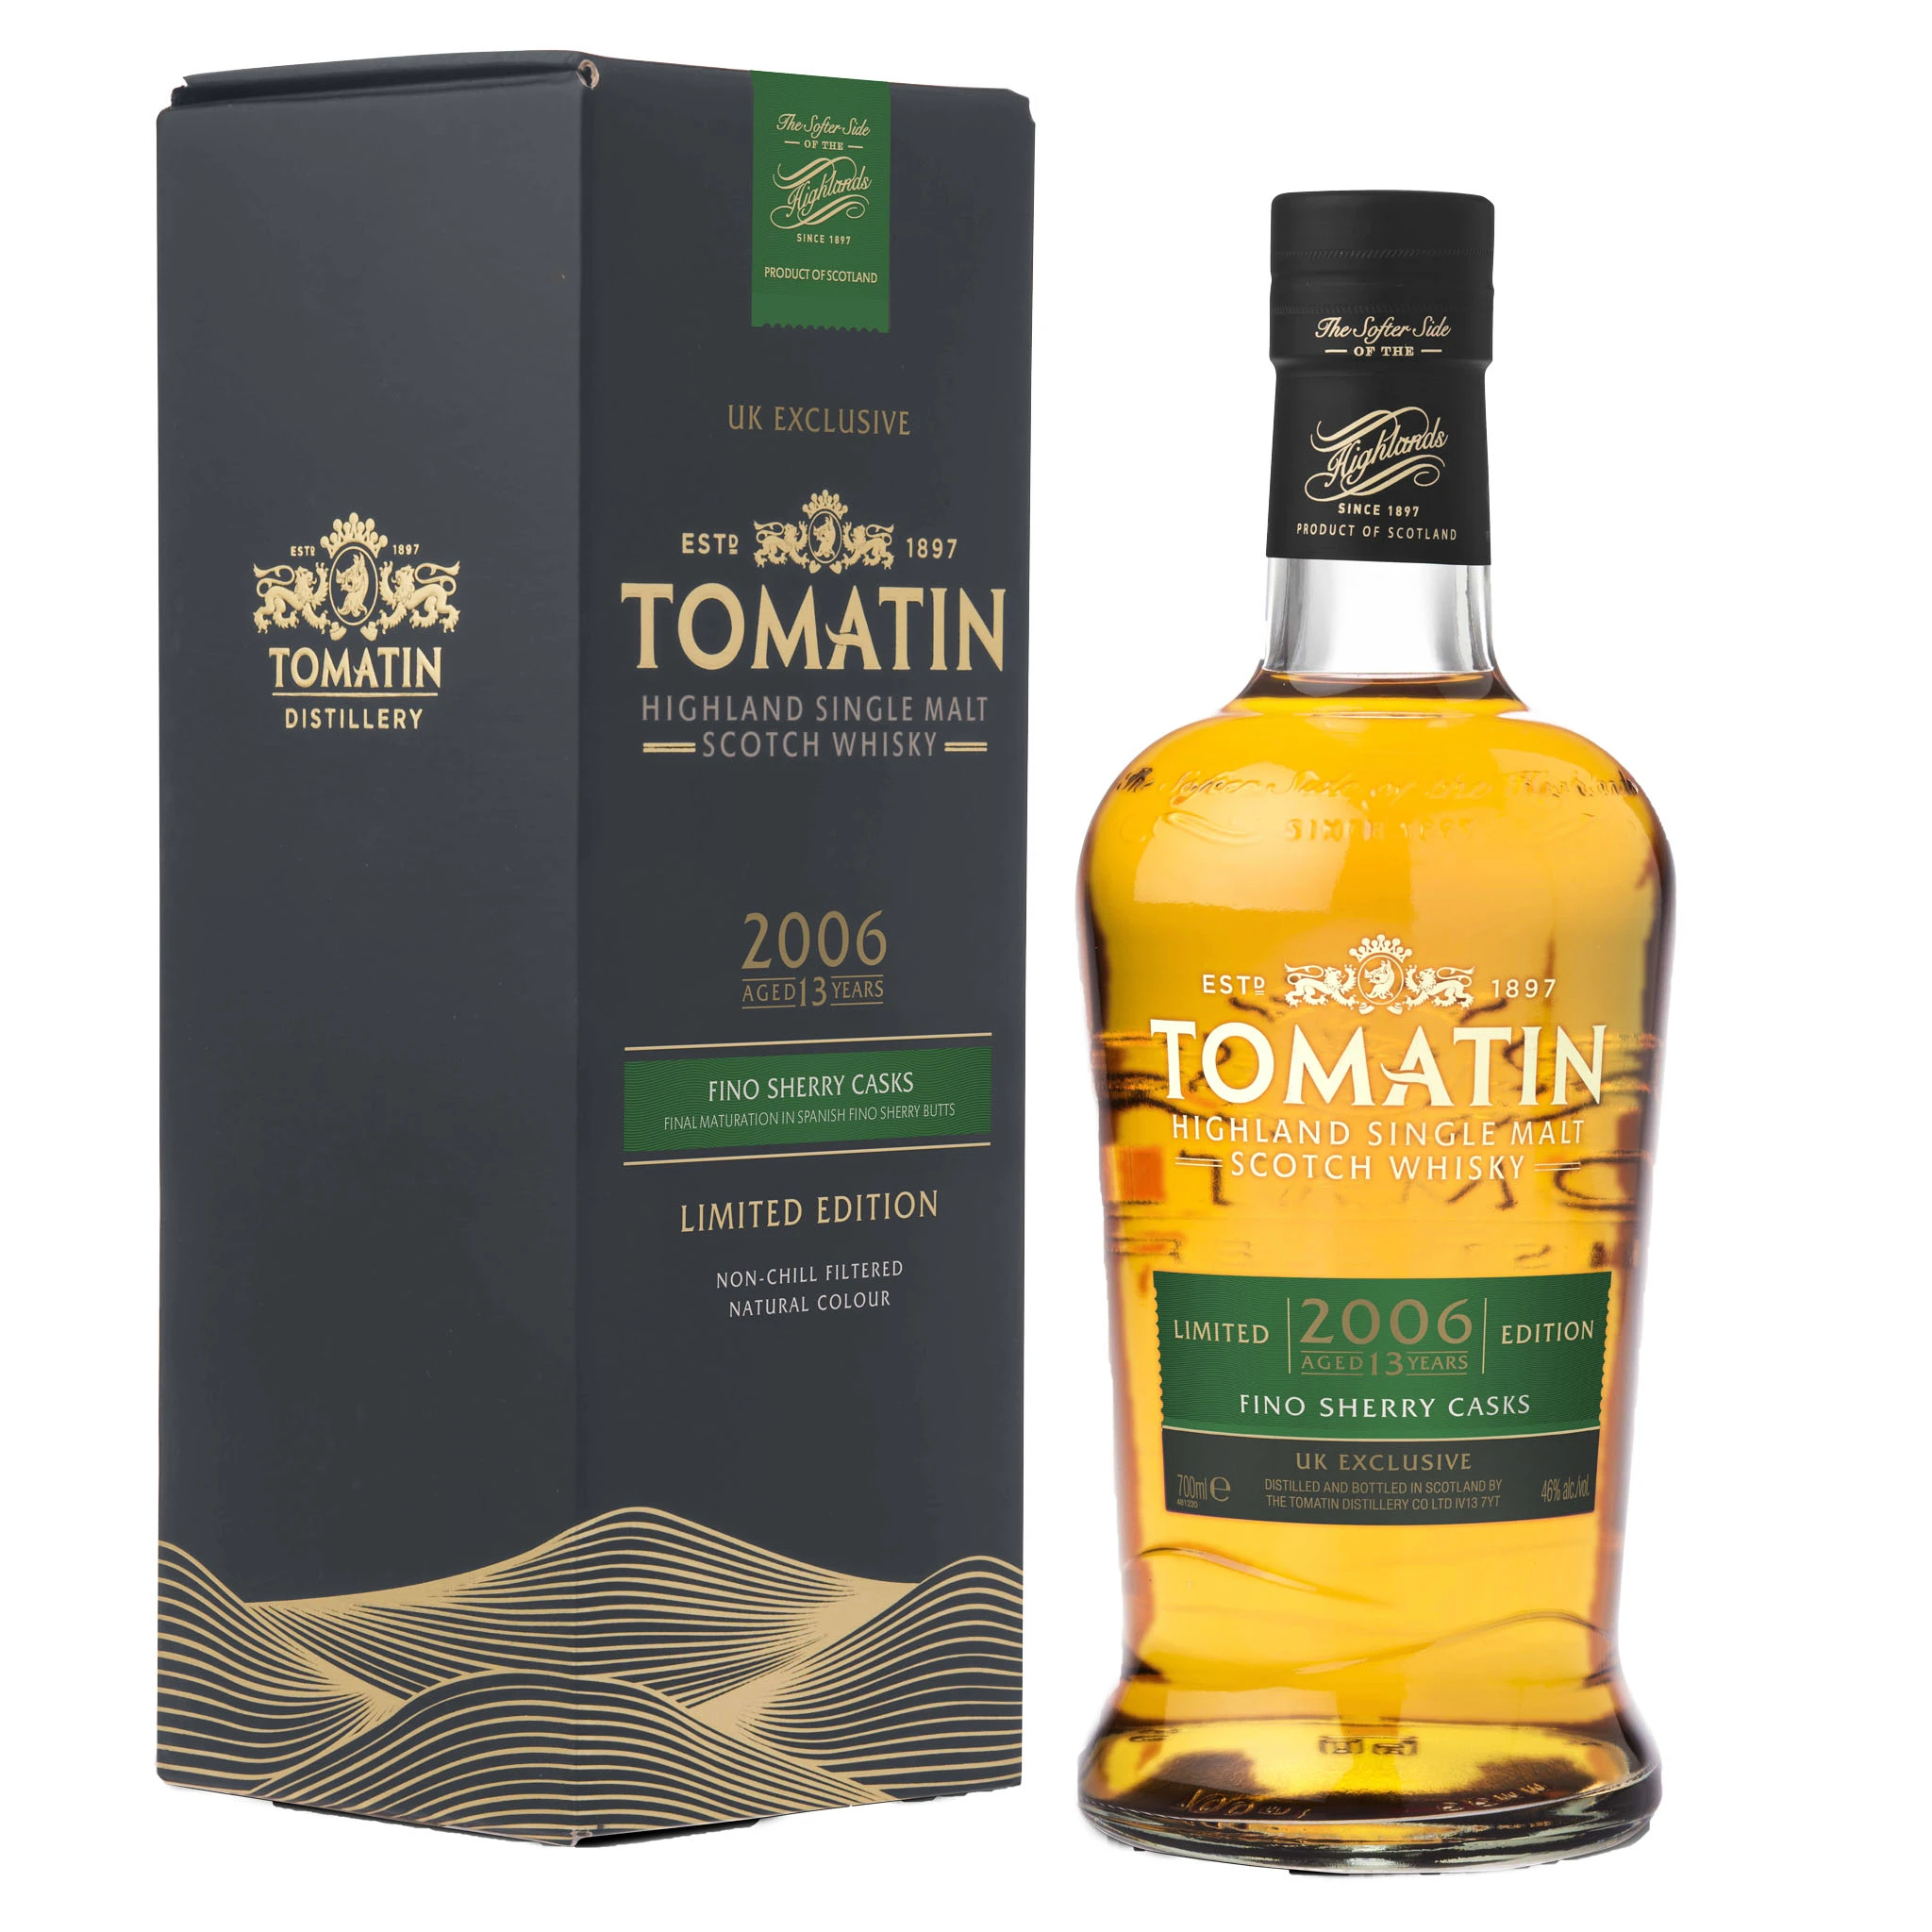 Tomatin 13 Year Old - 2006 - Fino Sherry Casks - Limited Edition - Single Malt Scotch Whisky.